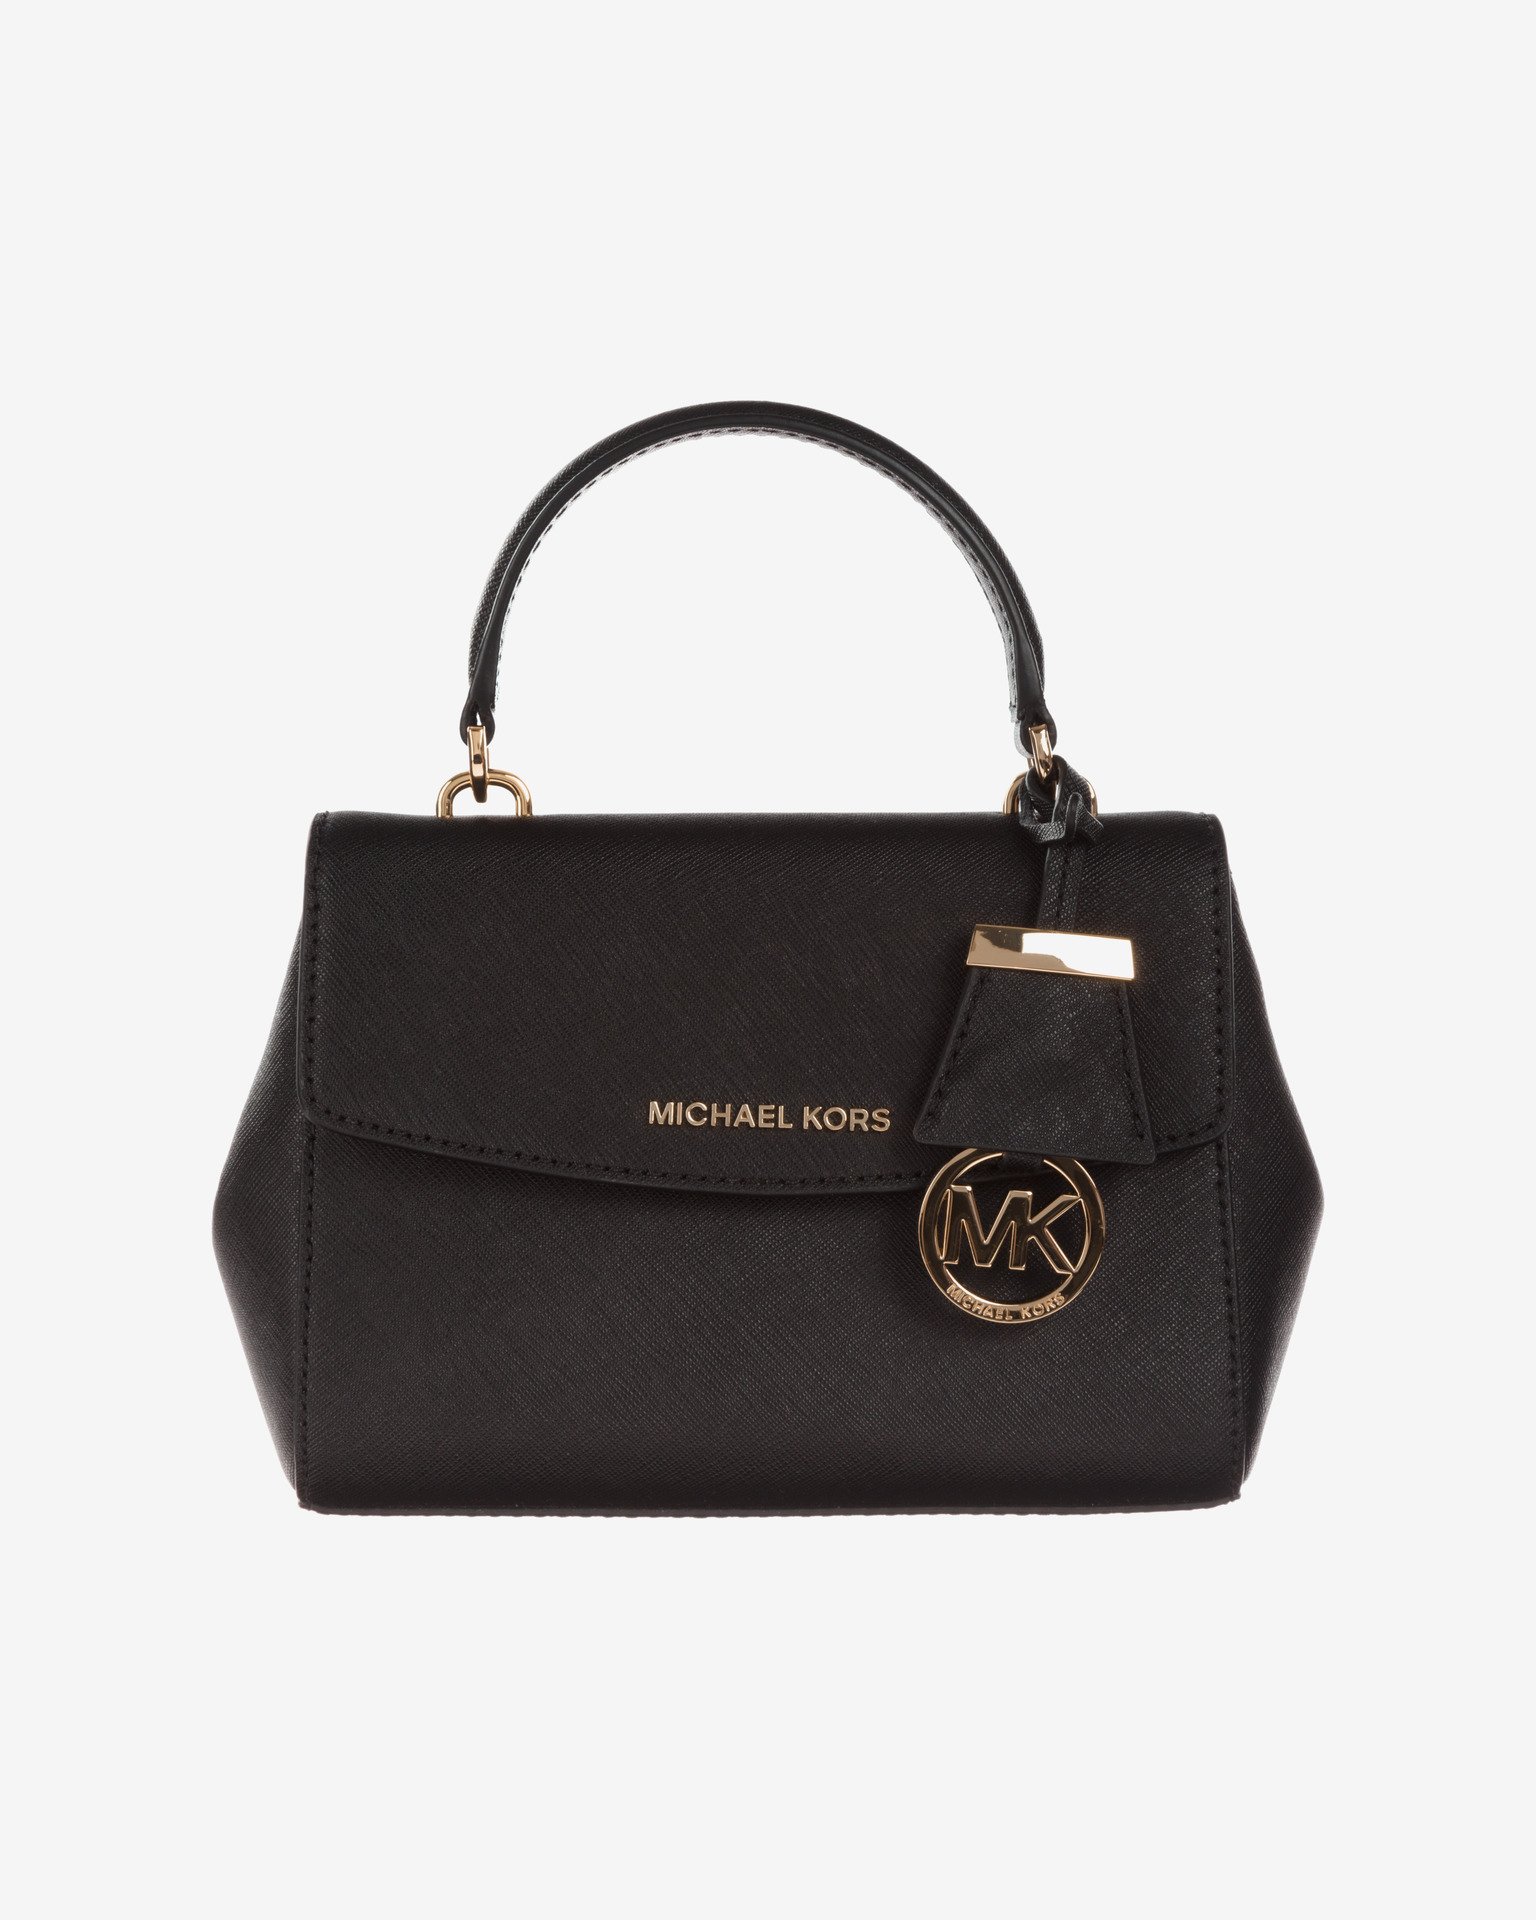 Ava Michael Kors Handbags for Women - Vestiaire Collective